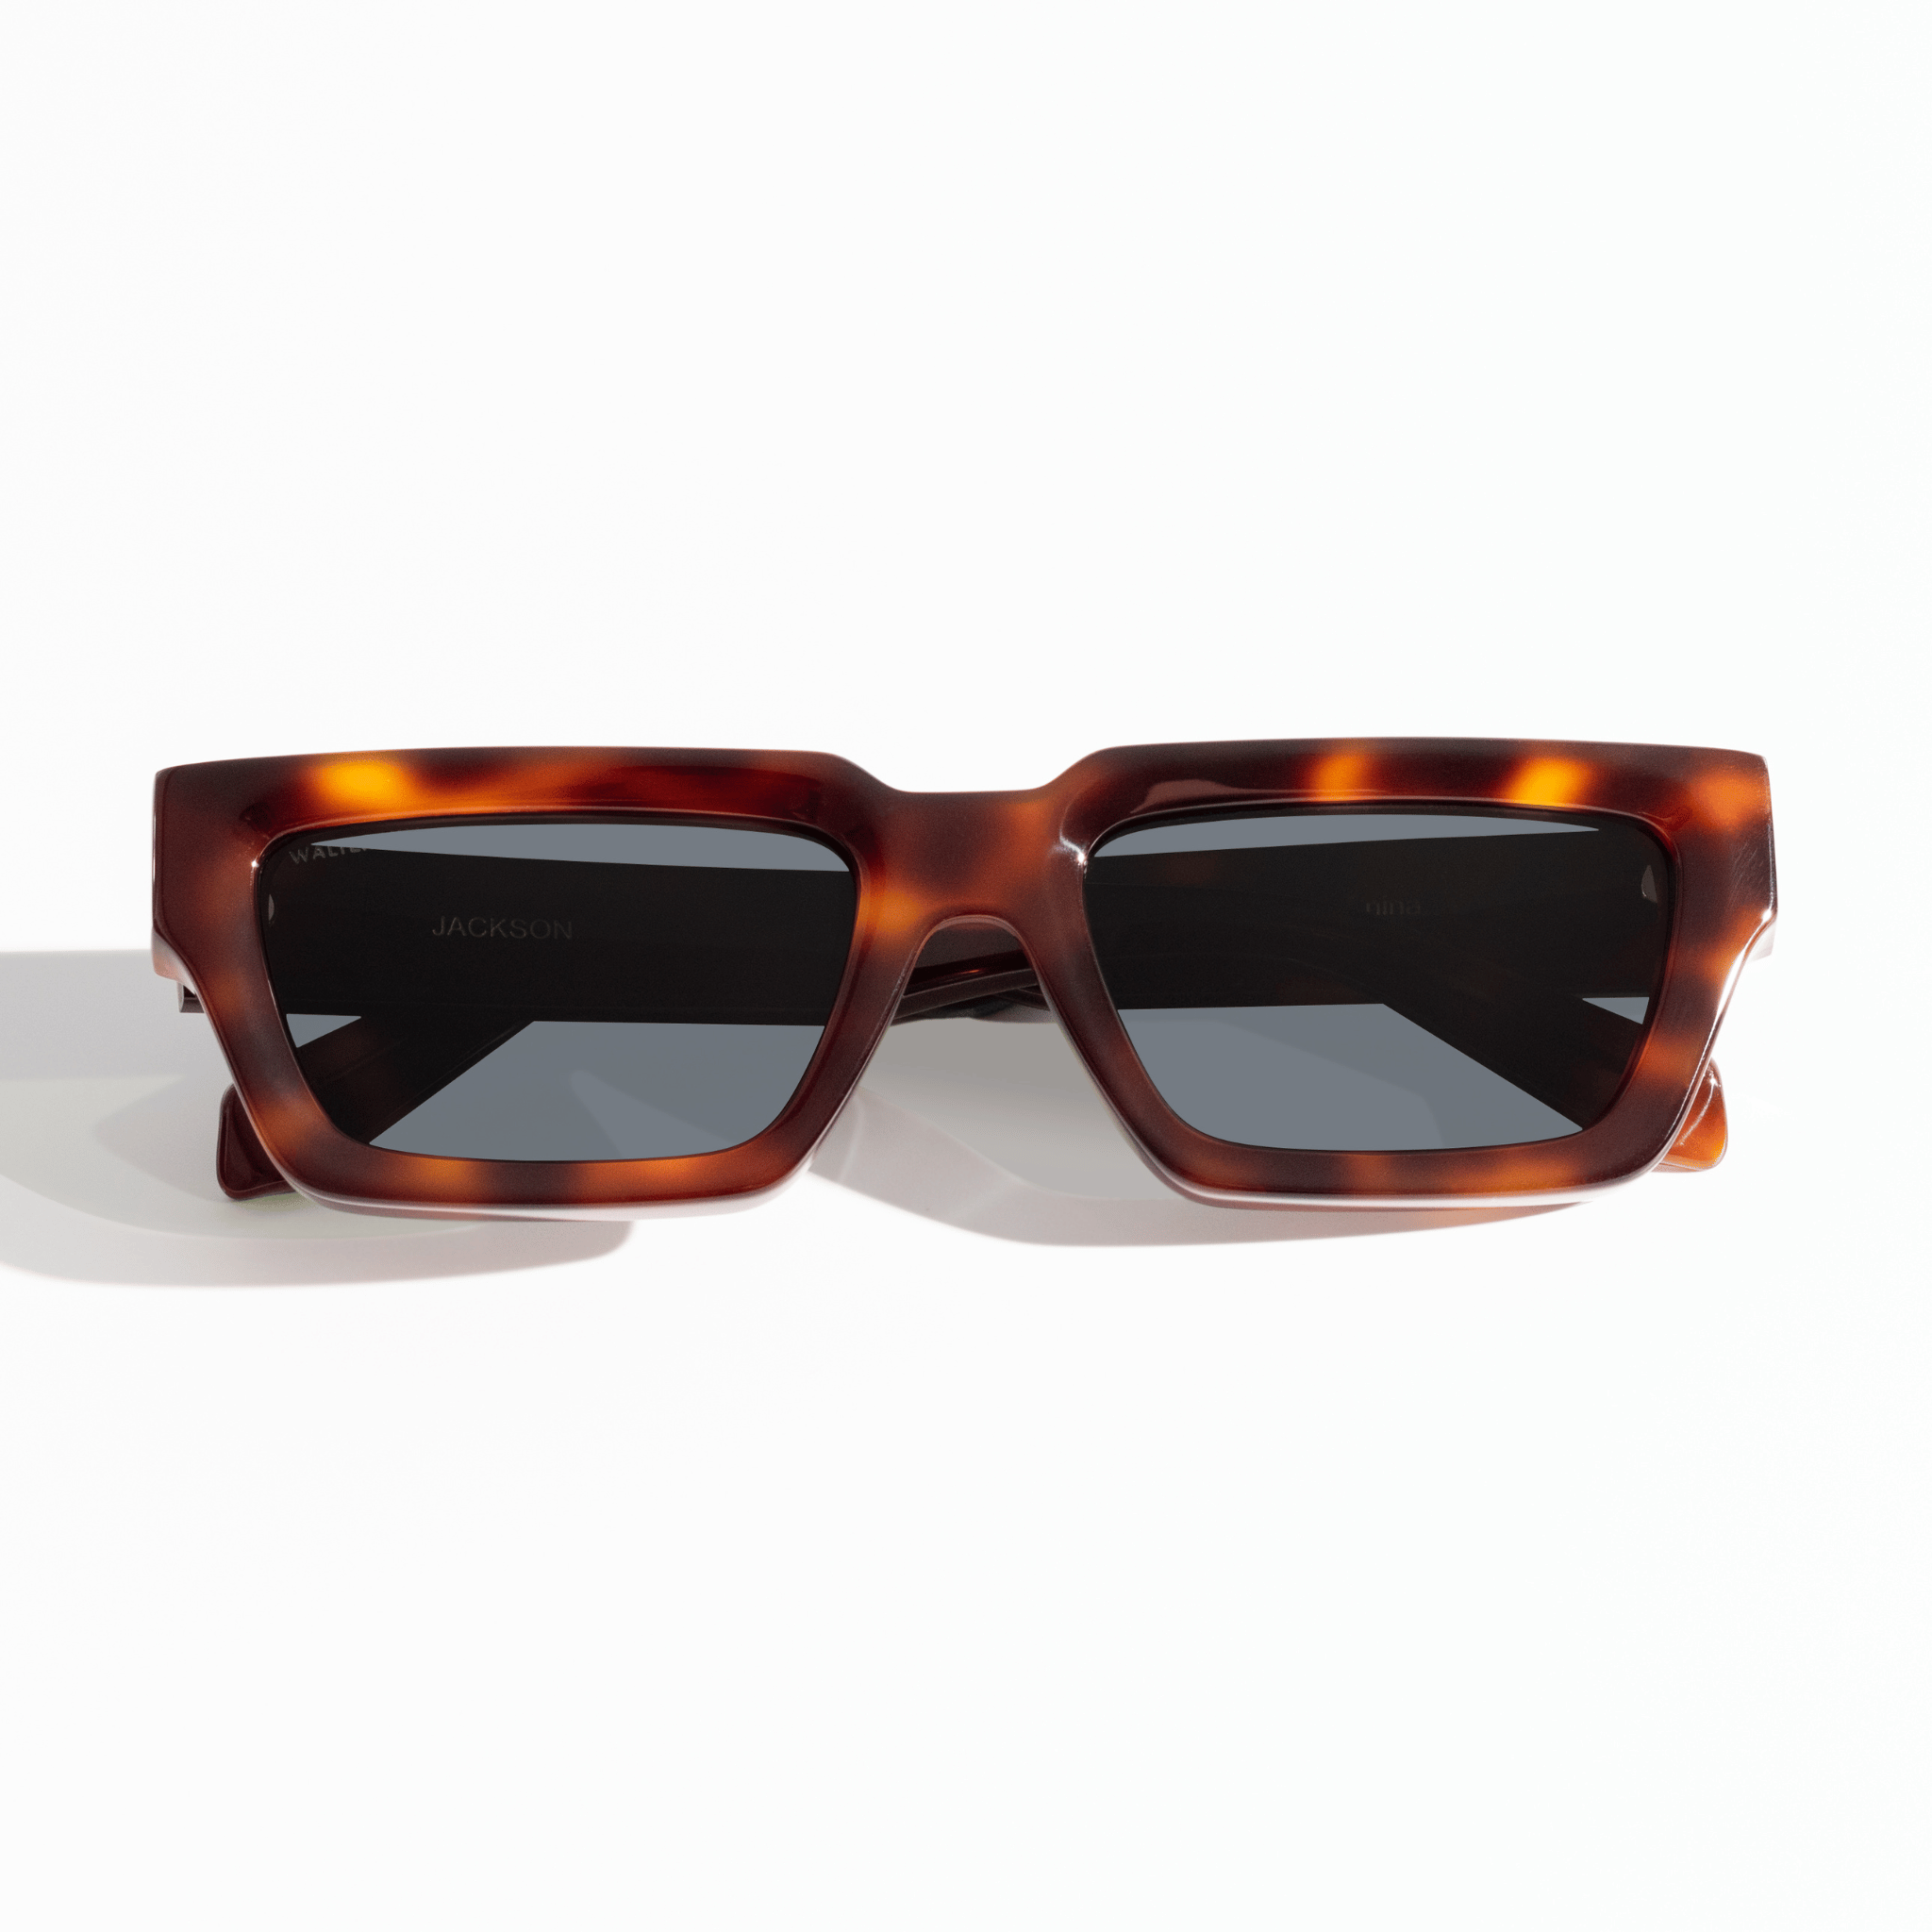 Walter Hill Sunglasses Tortoise / Oversized / Polarized Cat.3 JACKSON - Tortoise